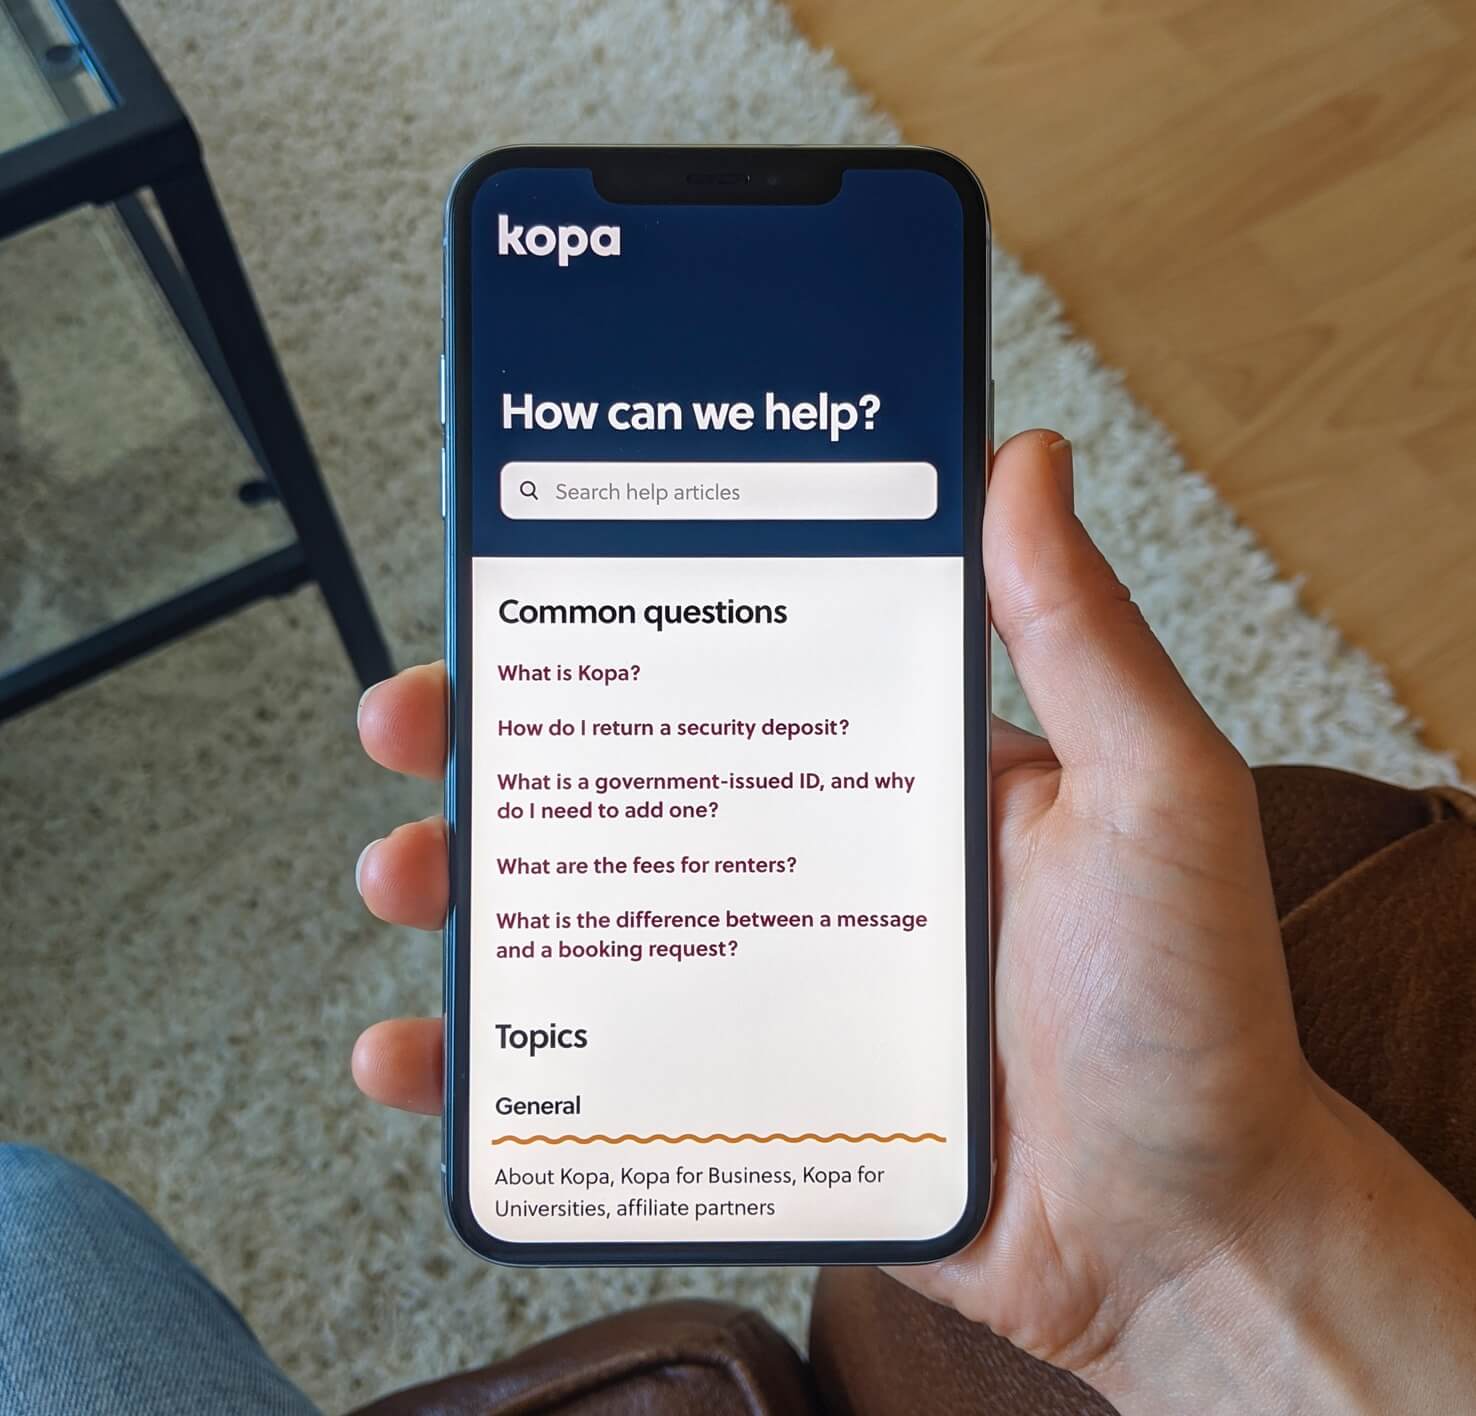 Kopa easy to use mobile app